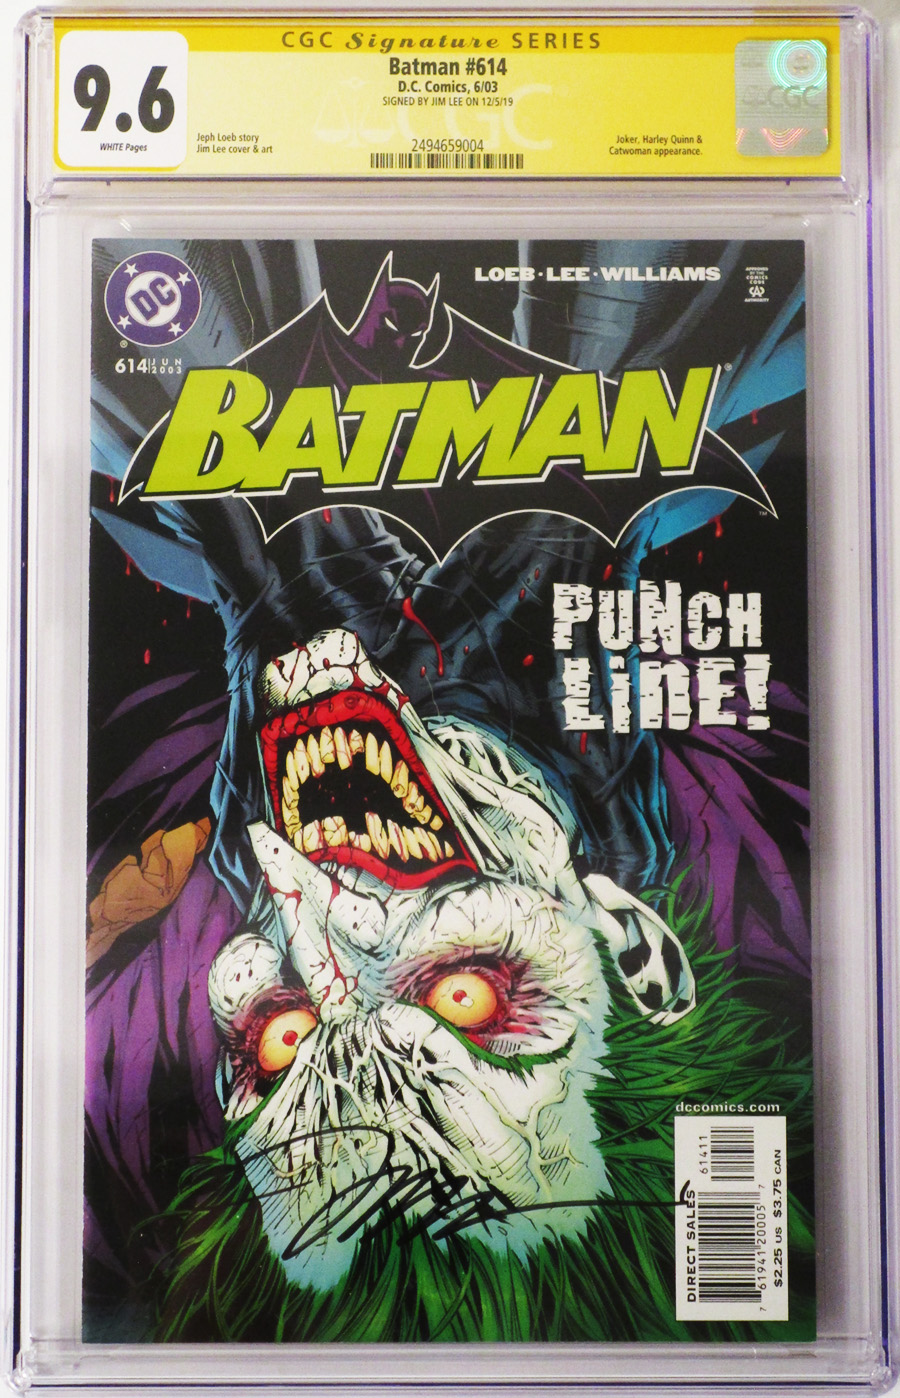 Batman #614 Cover C CGC 9.6 Signature Series Signed by Jim Lee